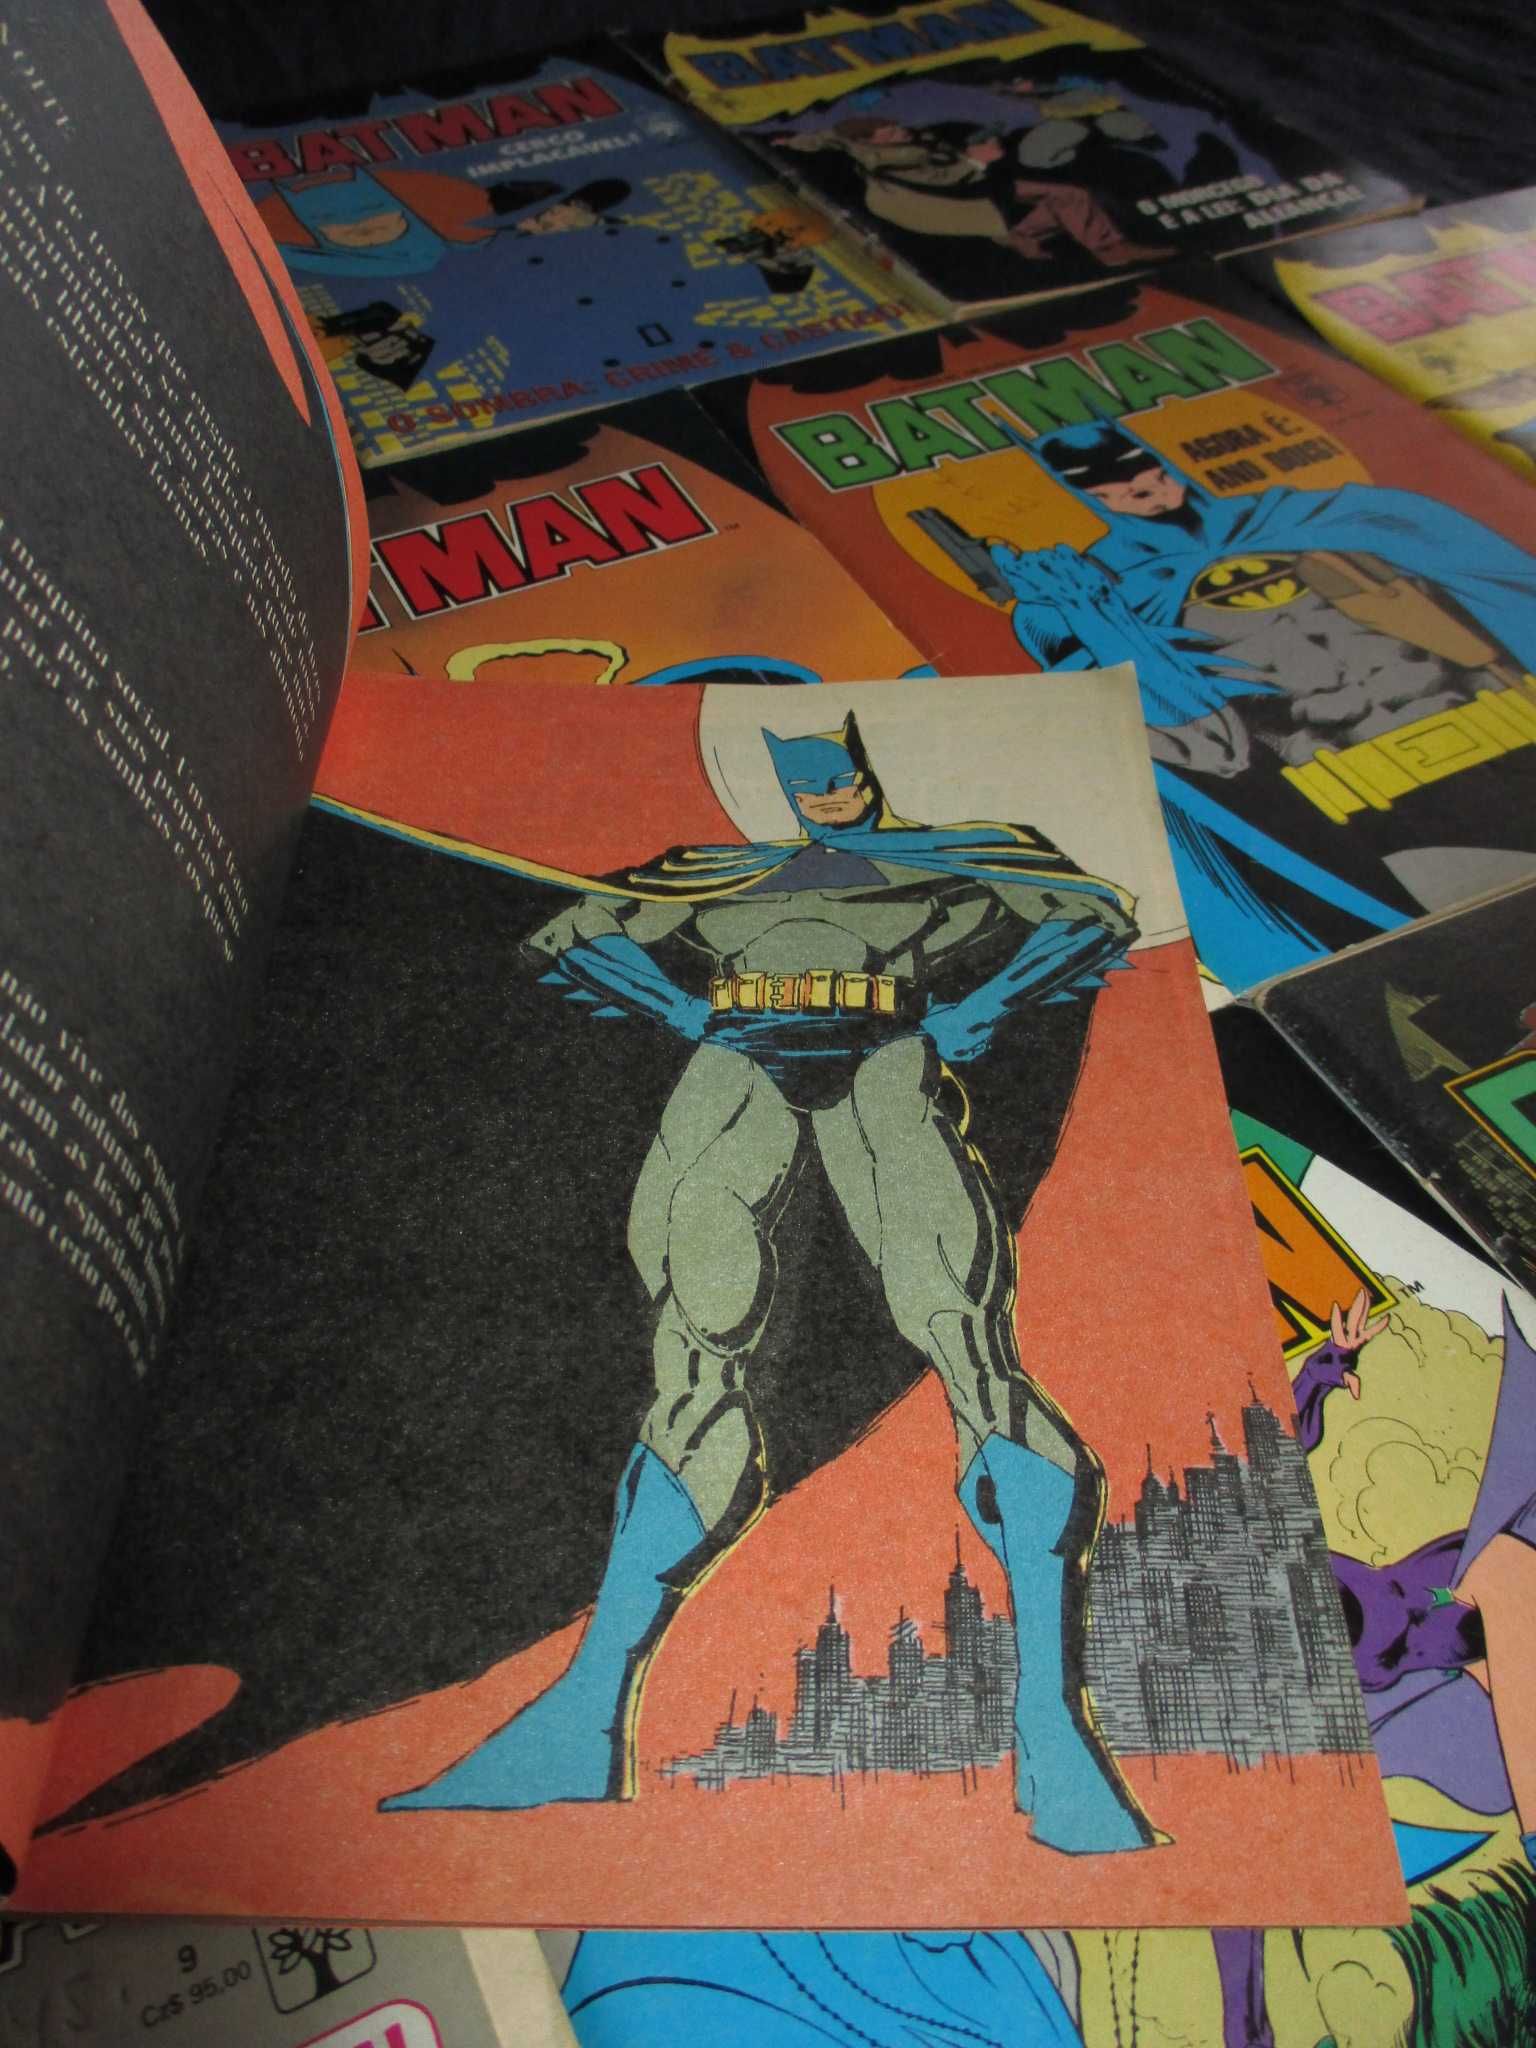 Livros BD Batman 2ª Série Abril DC Comics 1987